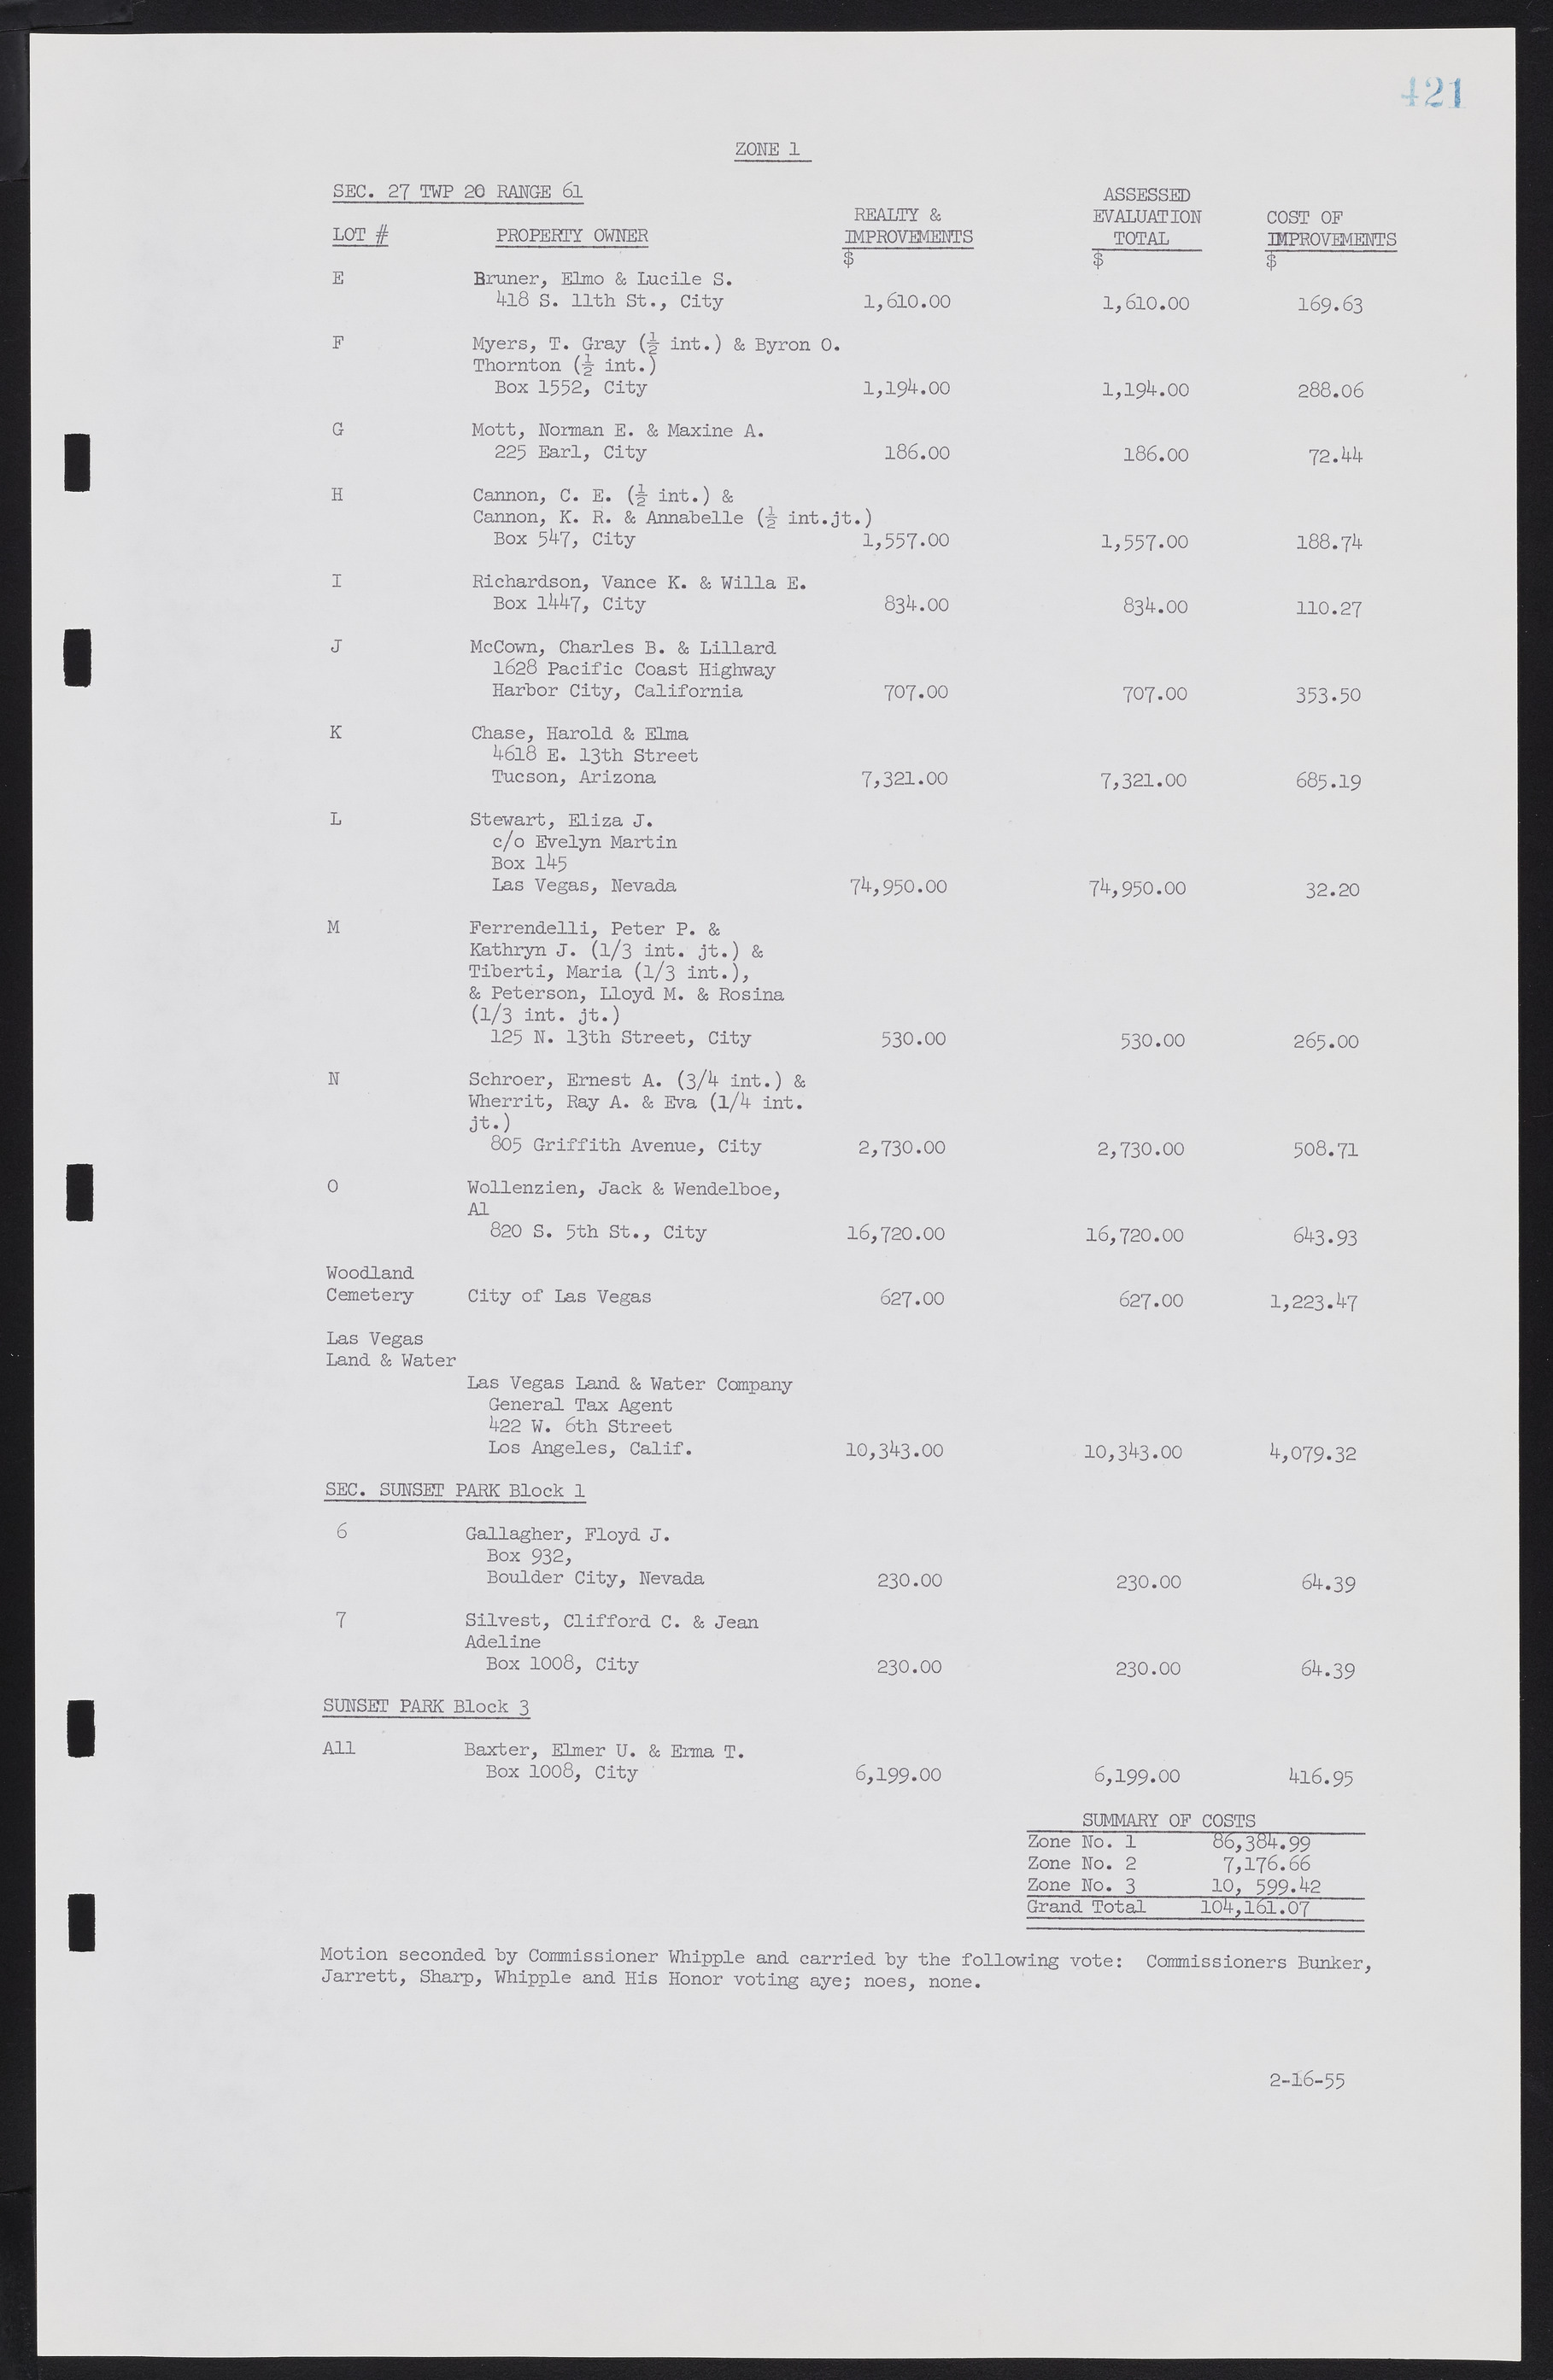 Las Vegas City Commission Minutes, February 17, 1954 to September 21, 1955, lvc000009-427